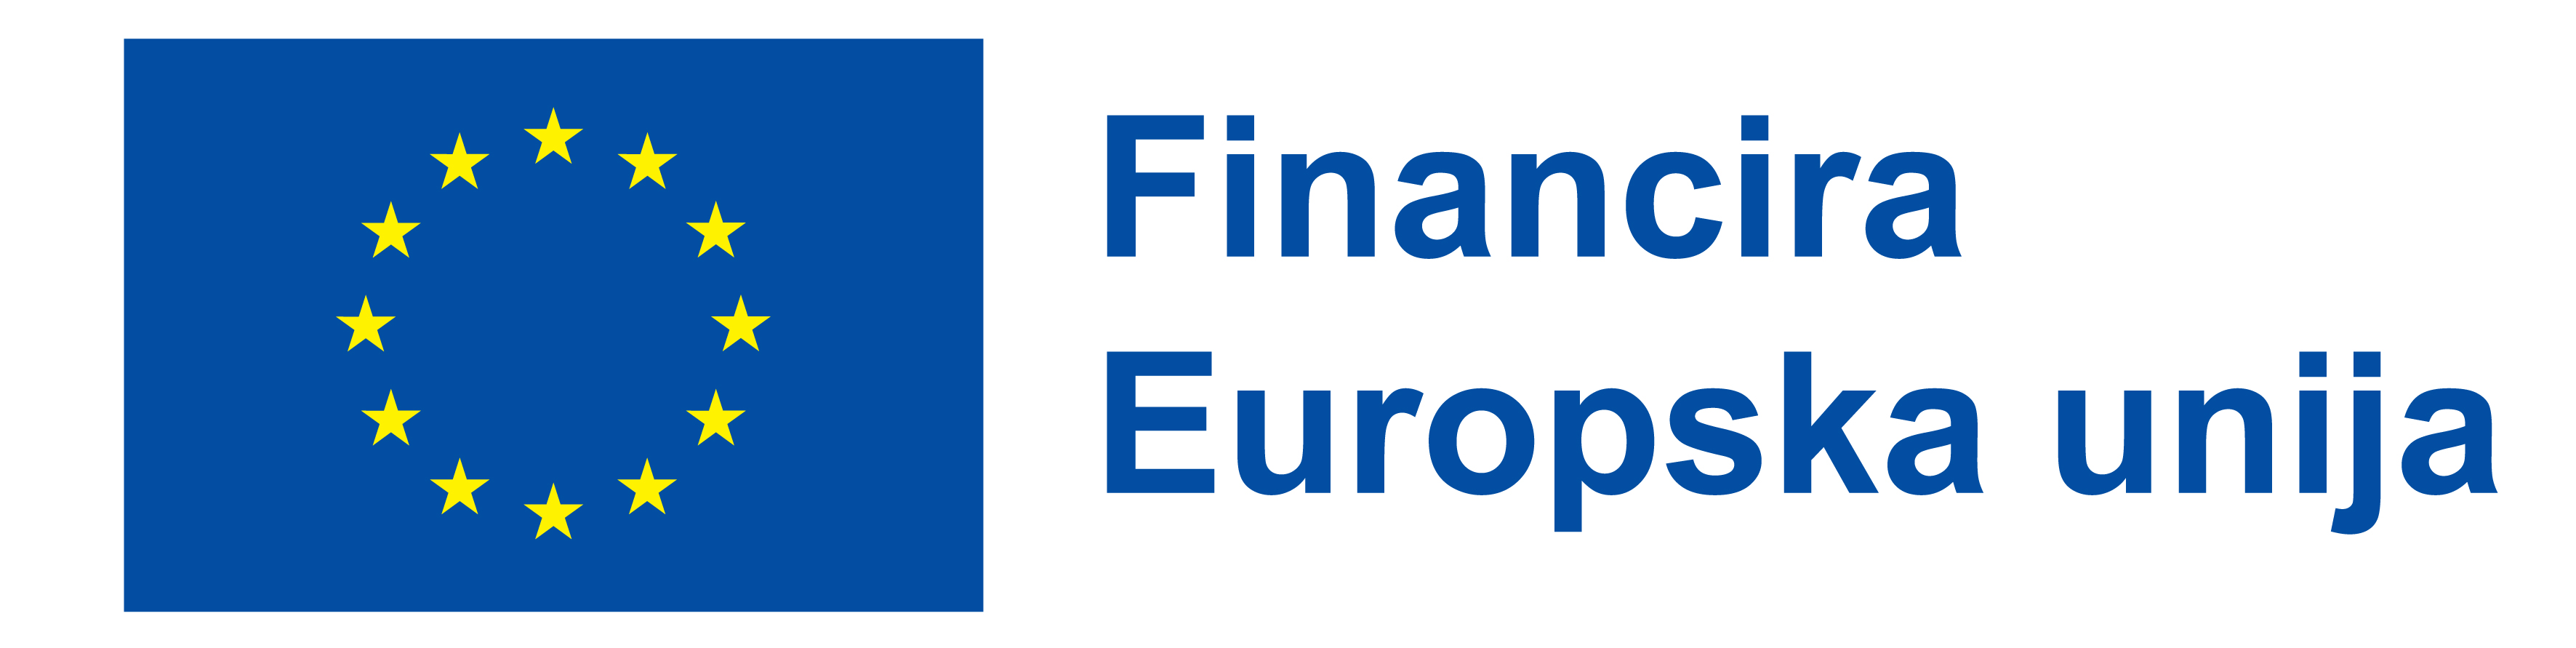 HR_Financira_Europska_unija_POS.jpg